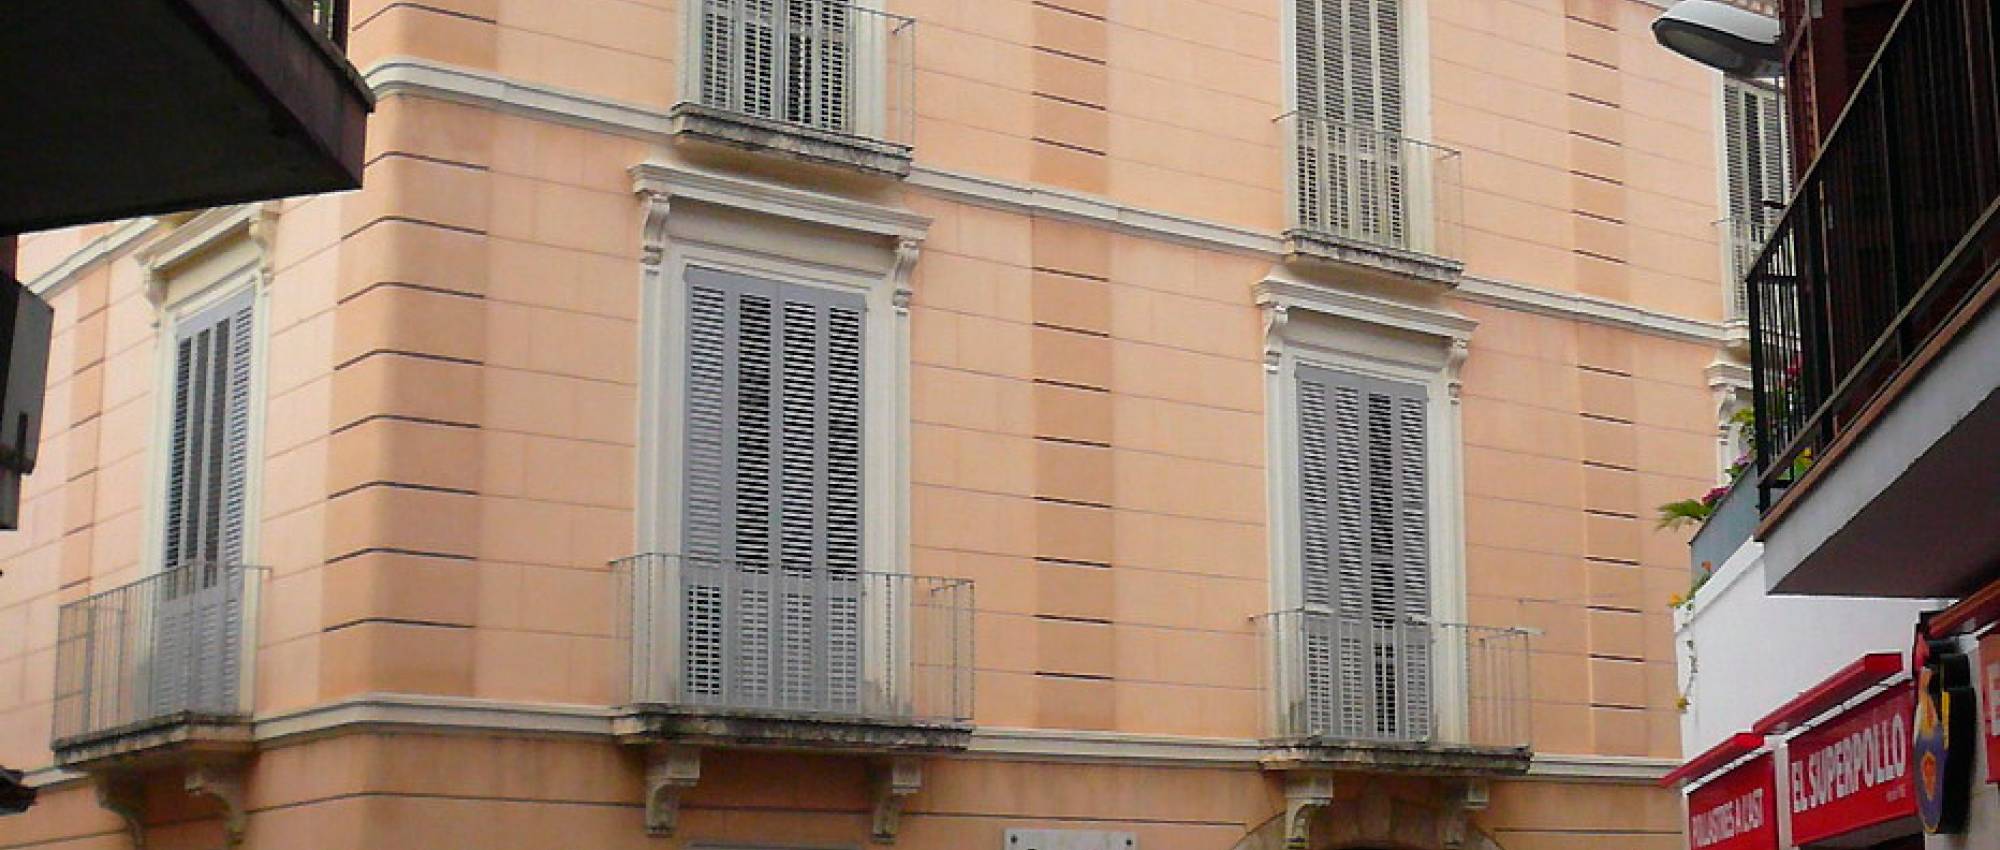 Detall de la façana de Can Llopis. CC BY-SA 3.0 - Pere López / Wikimedia Commons